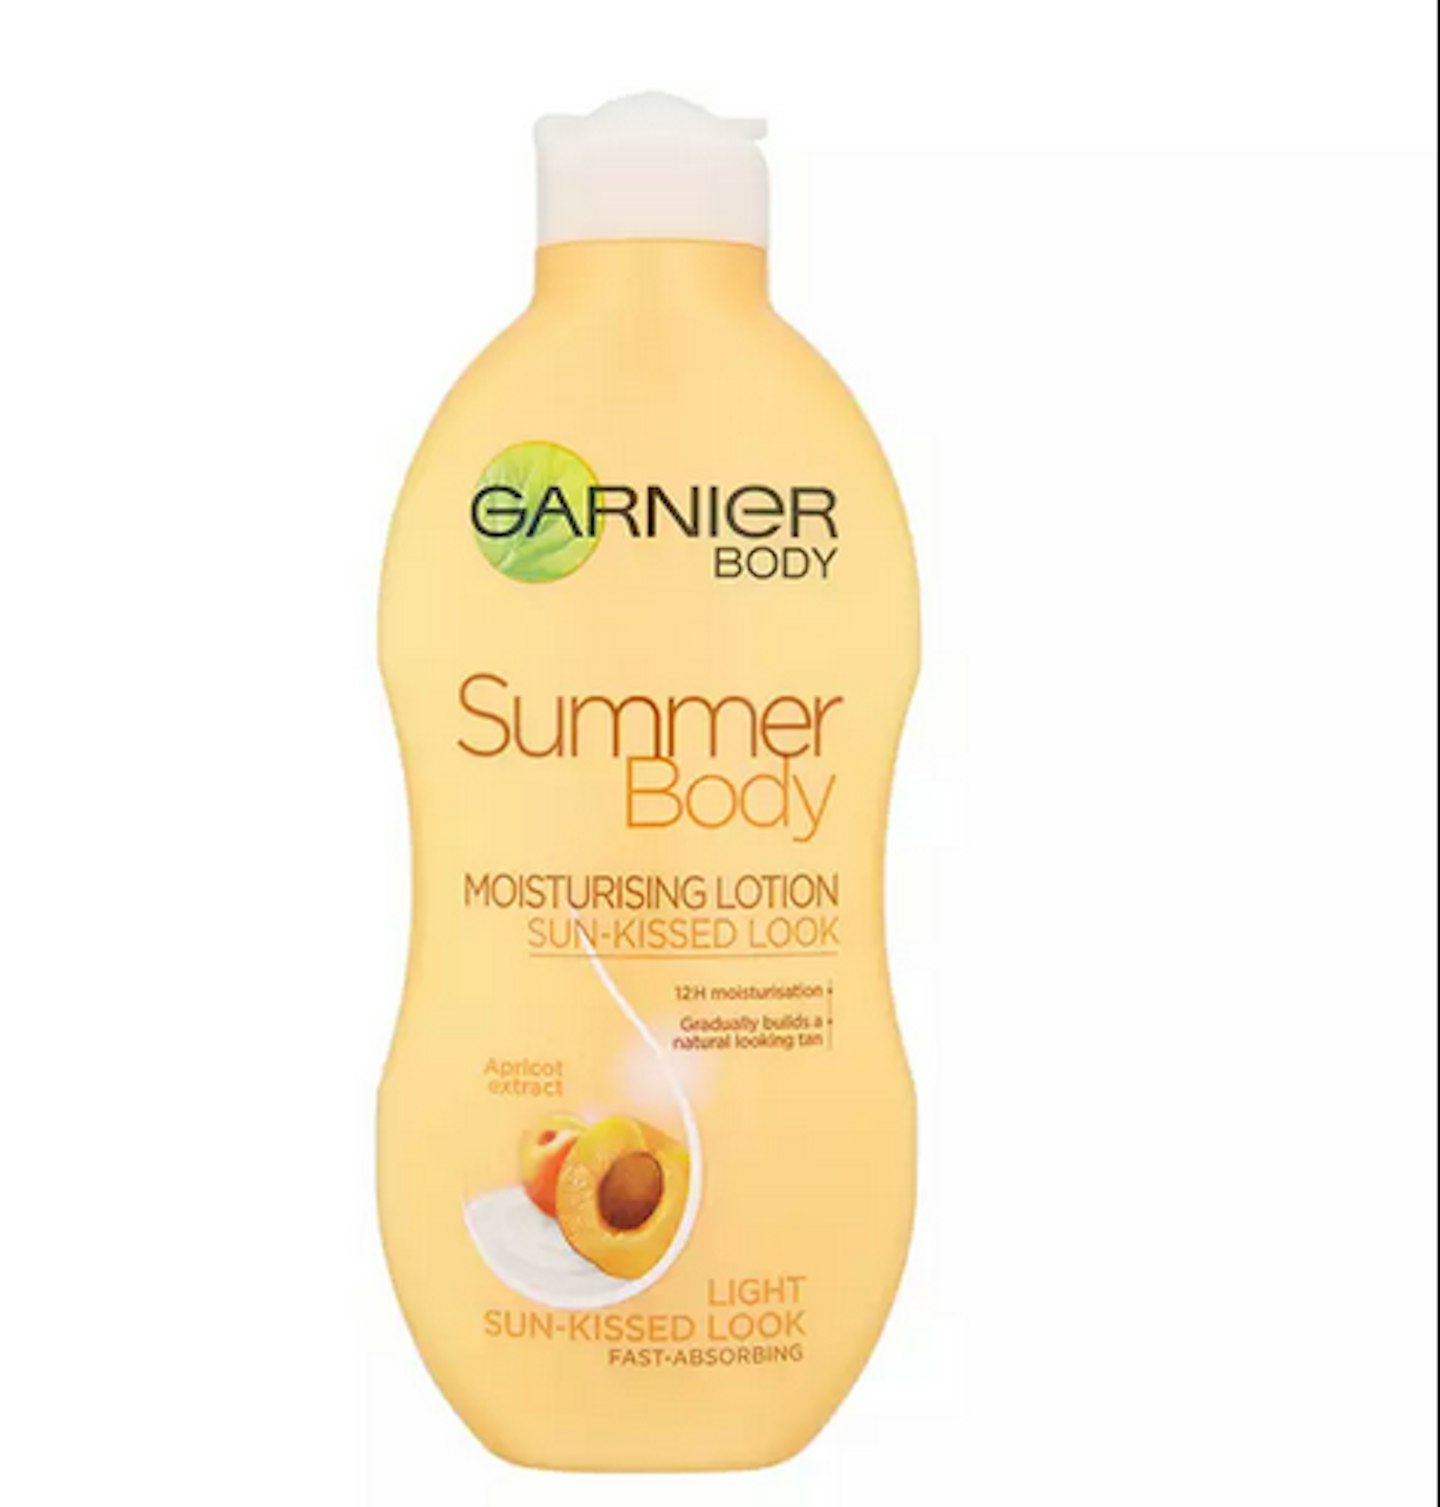 Garnier Summerbody Moisturising Lotion Sun-Kissed Look, £7.99